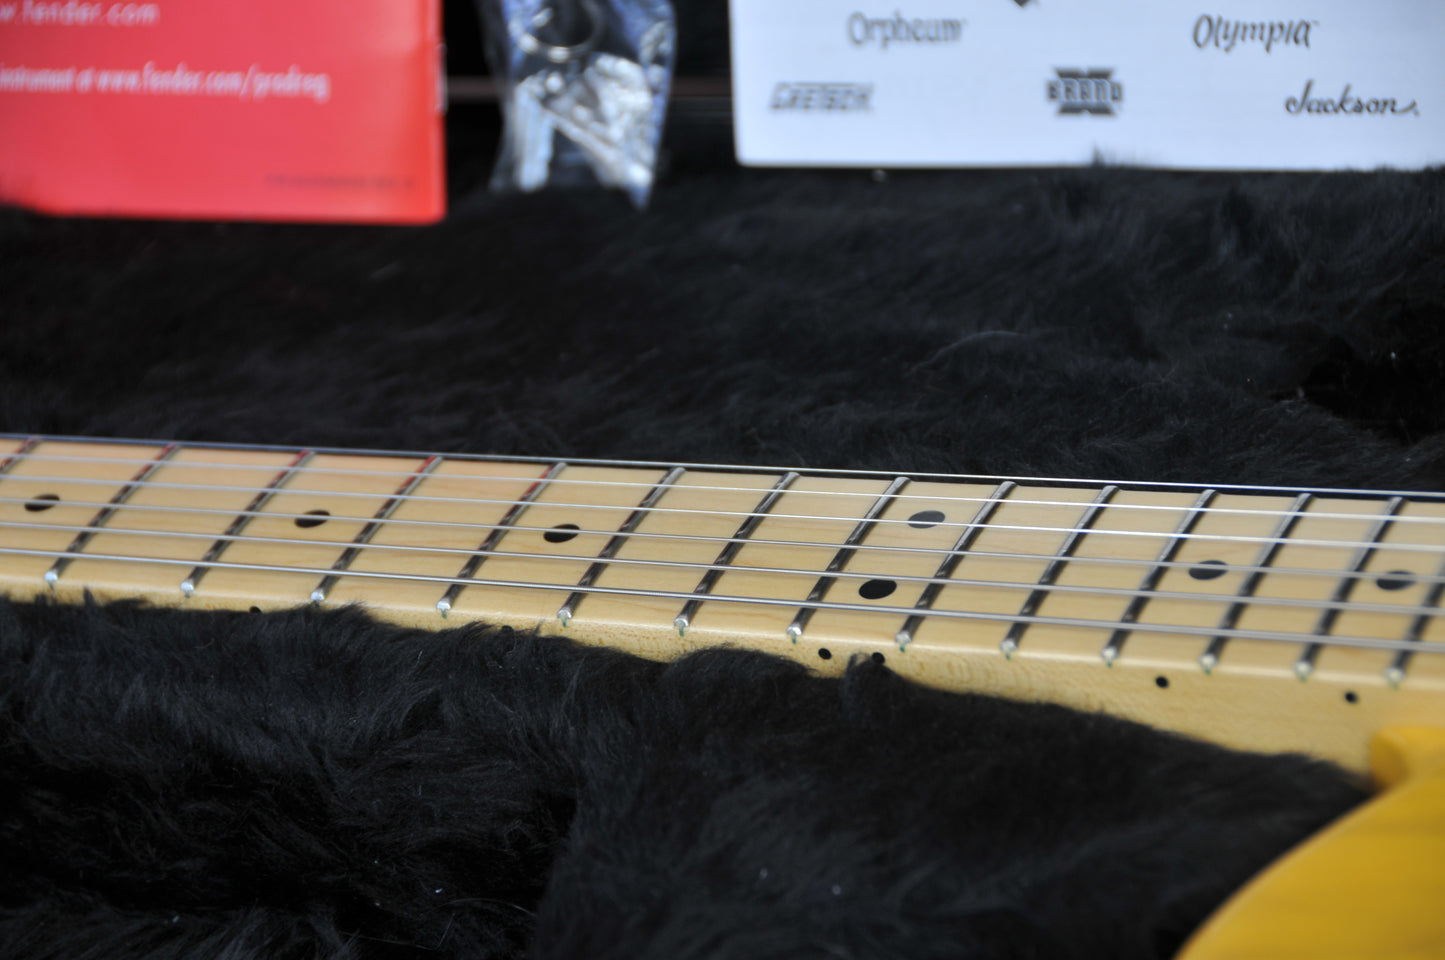 Fender American Deluxe Telecaster Ash 2015